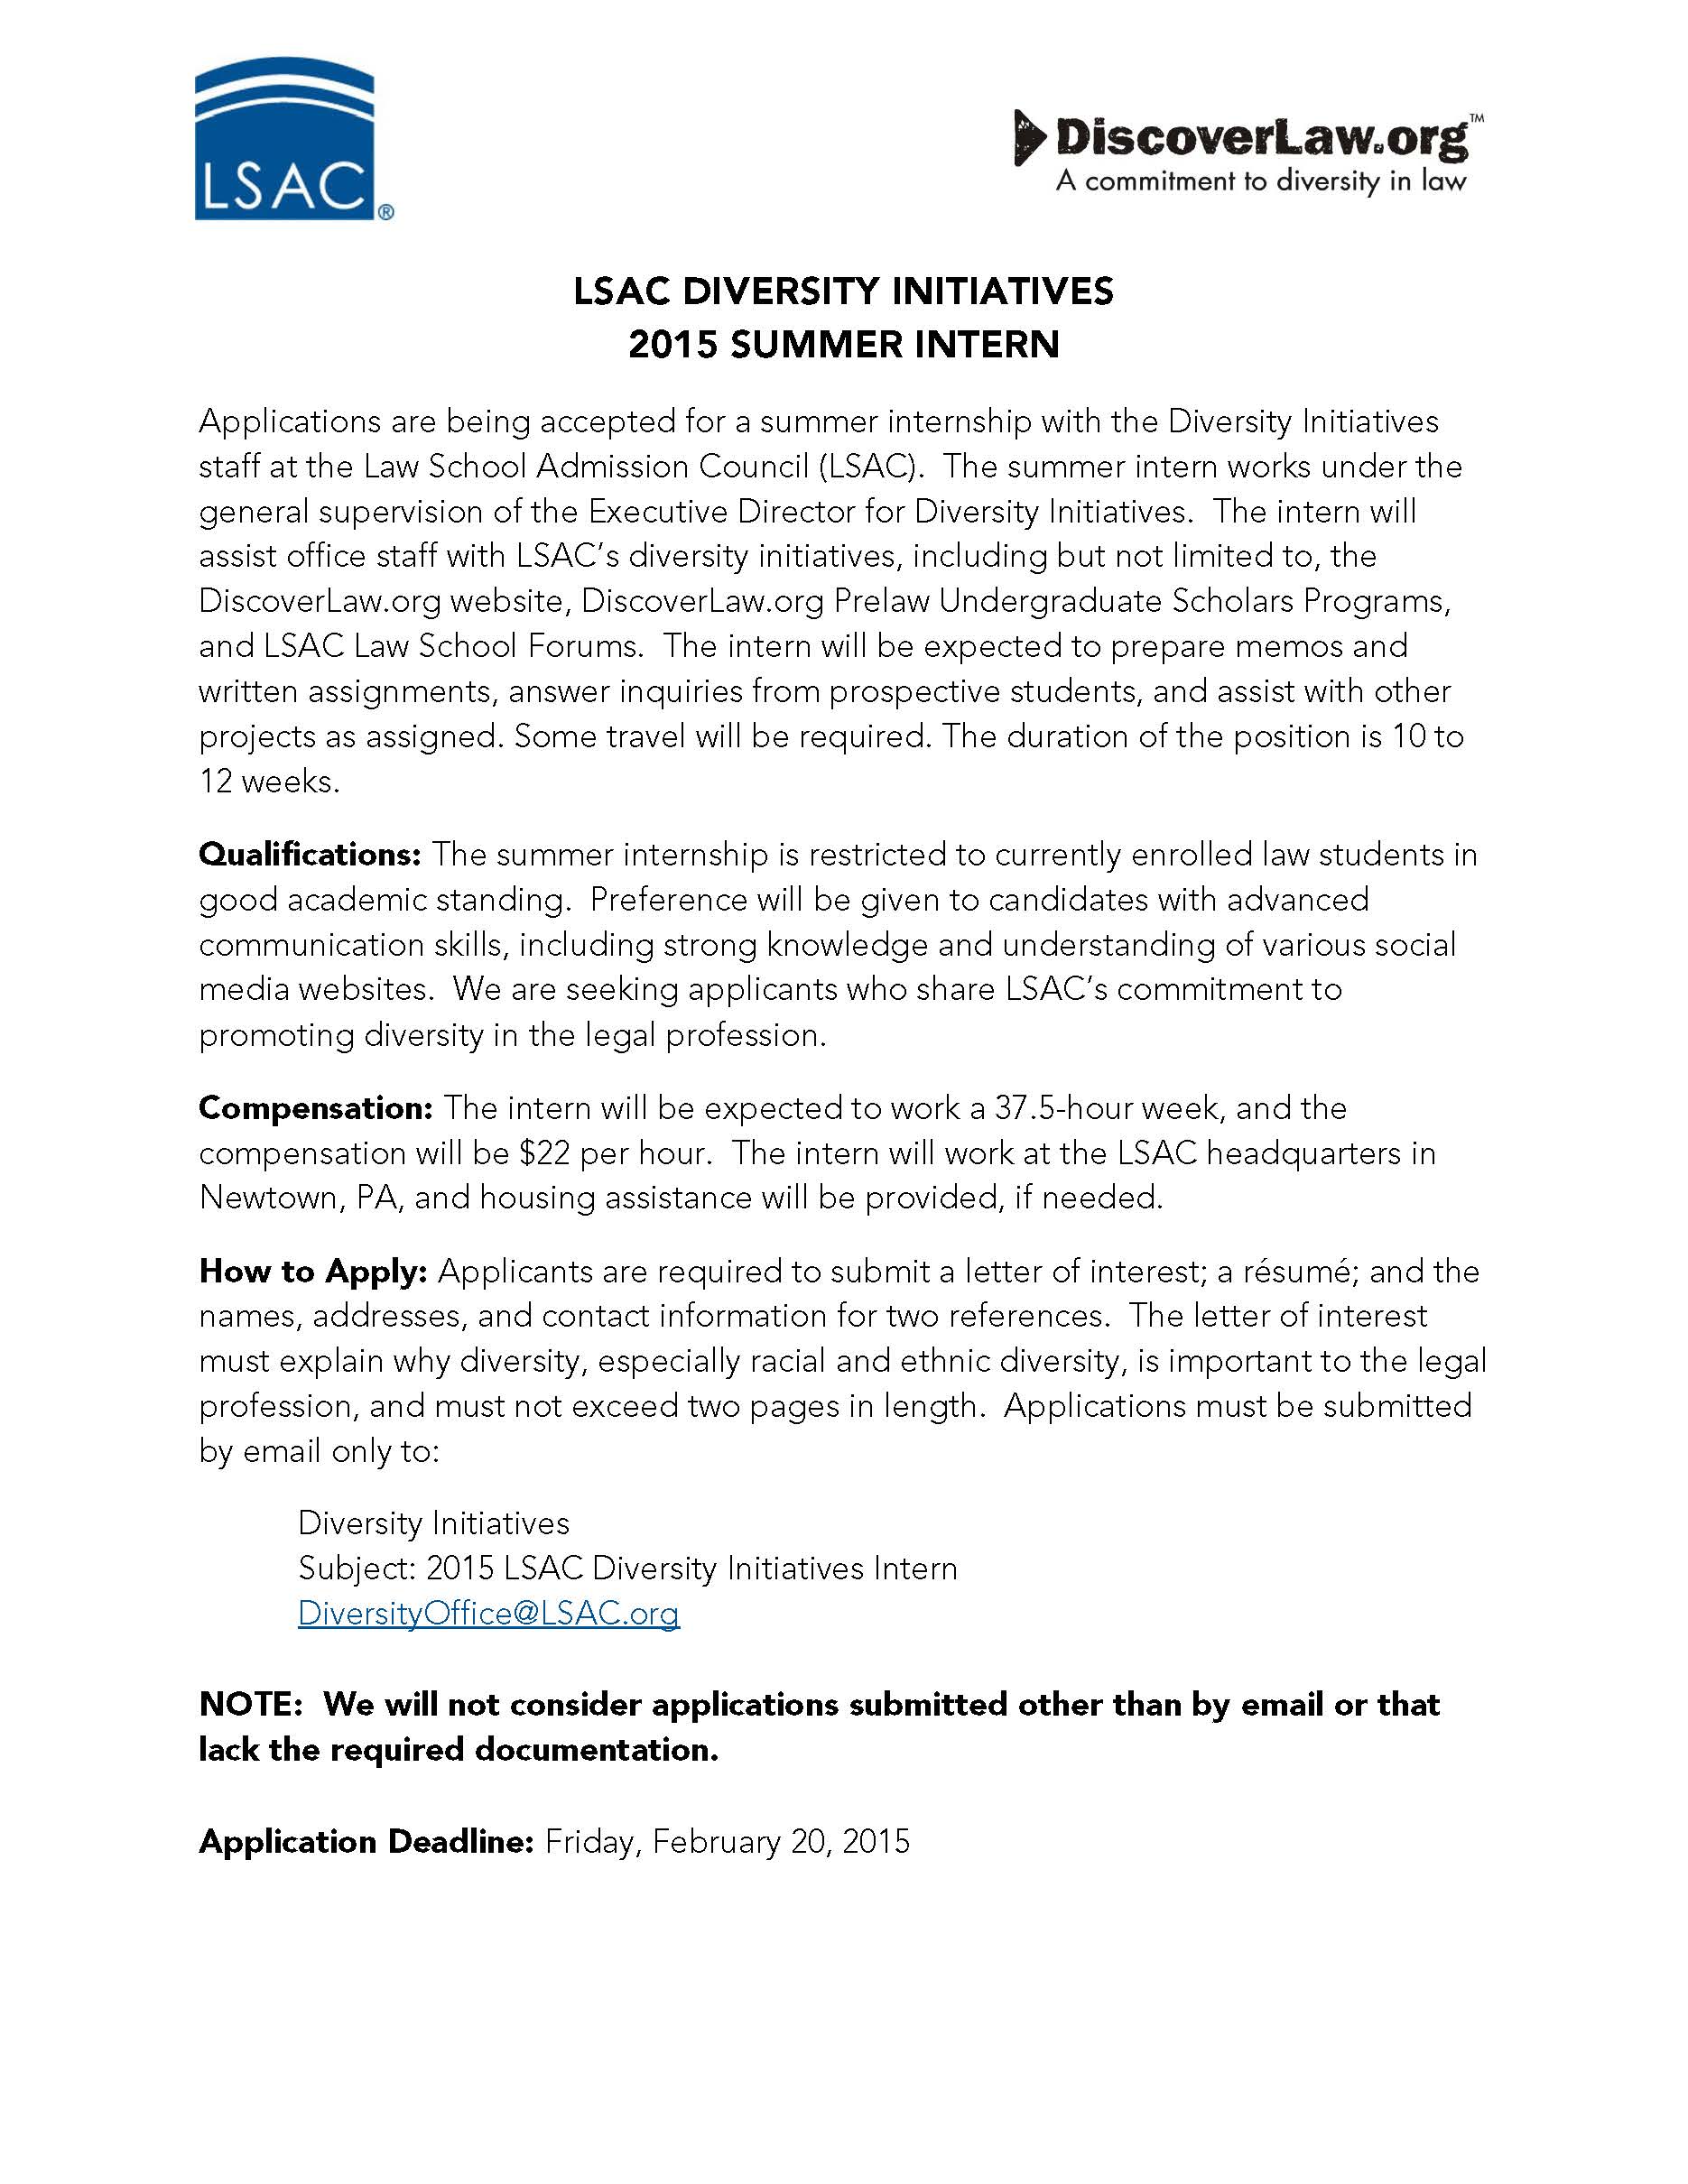 LSAC Diversity Initiatives Internship